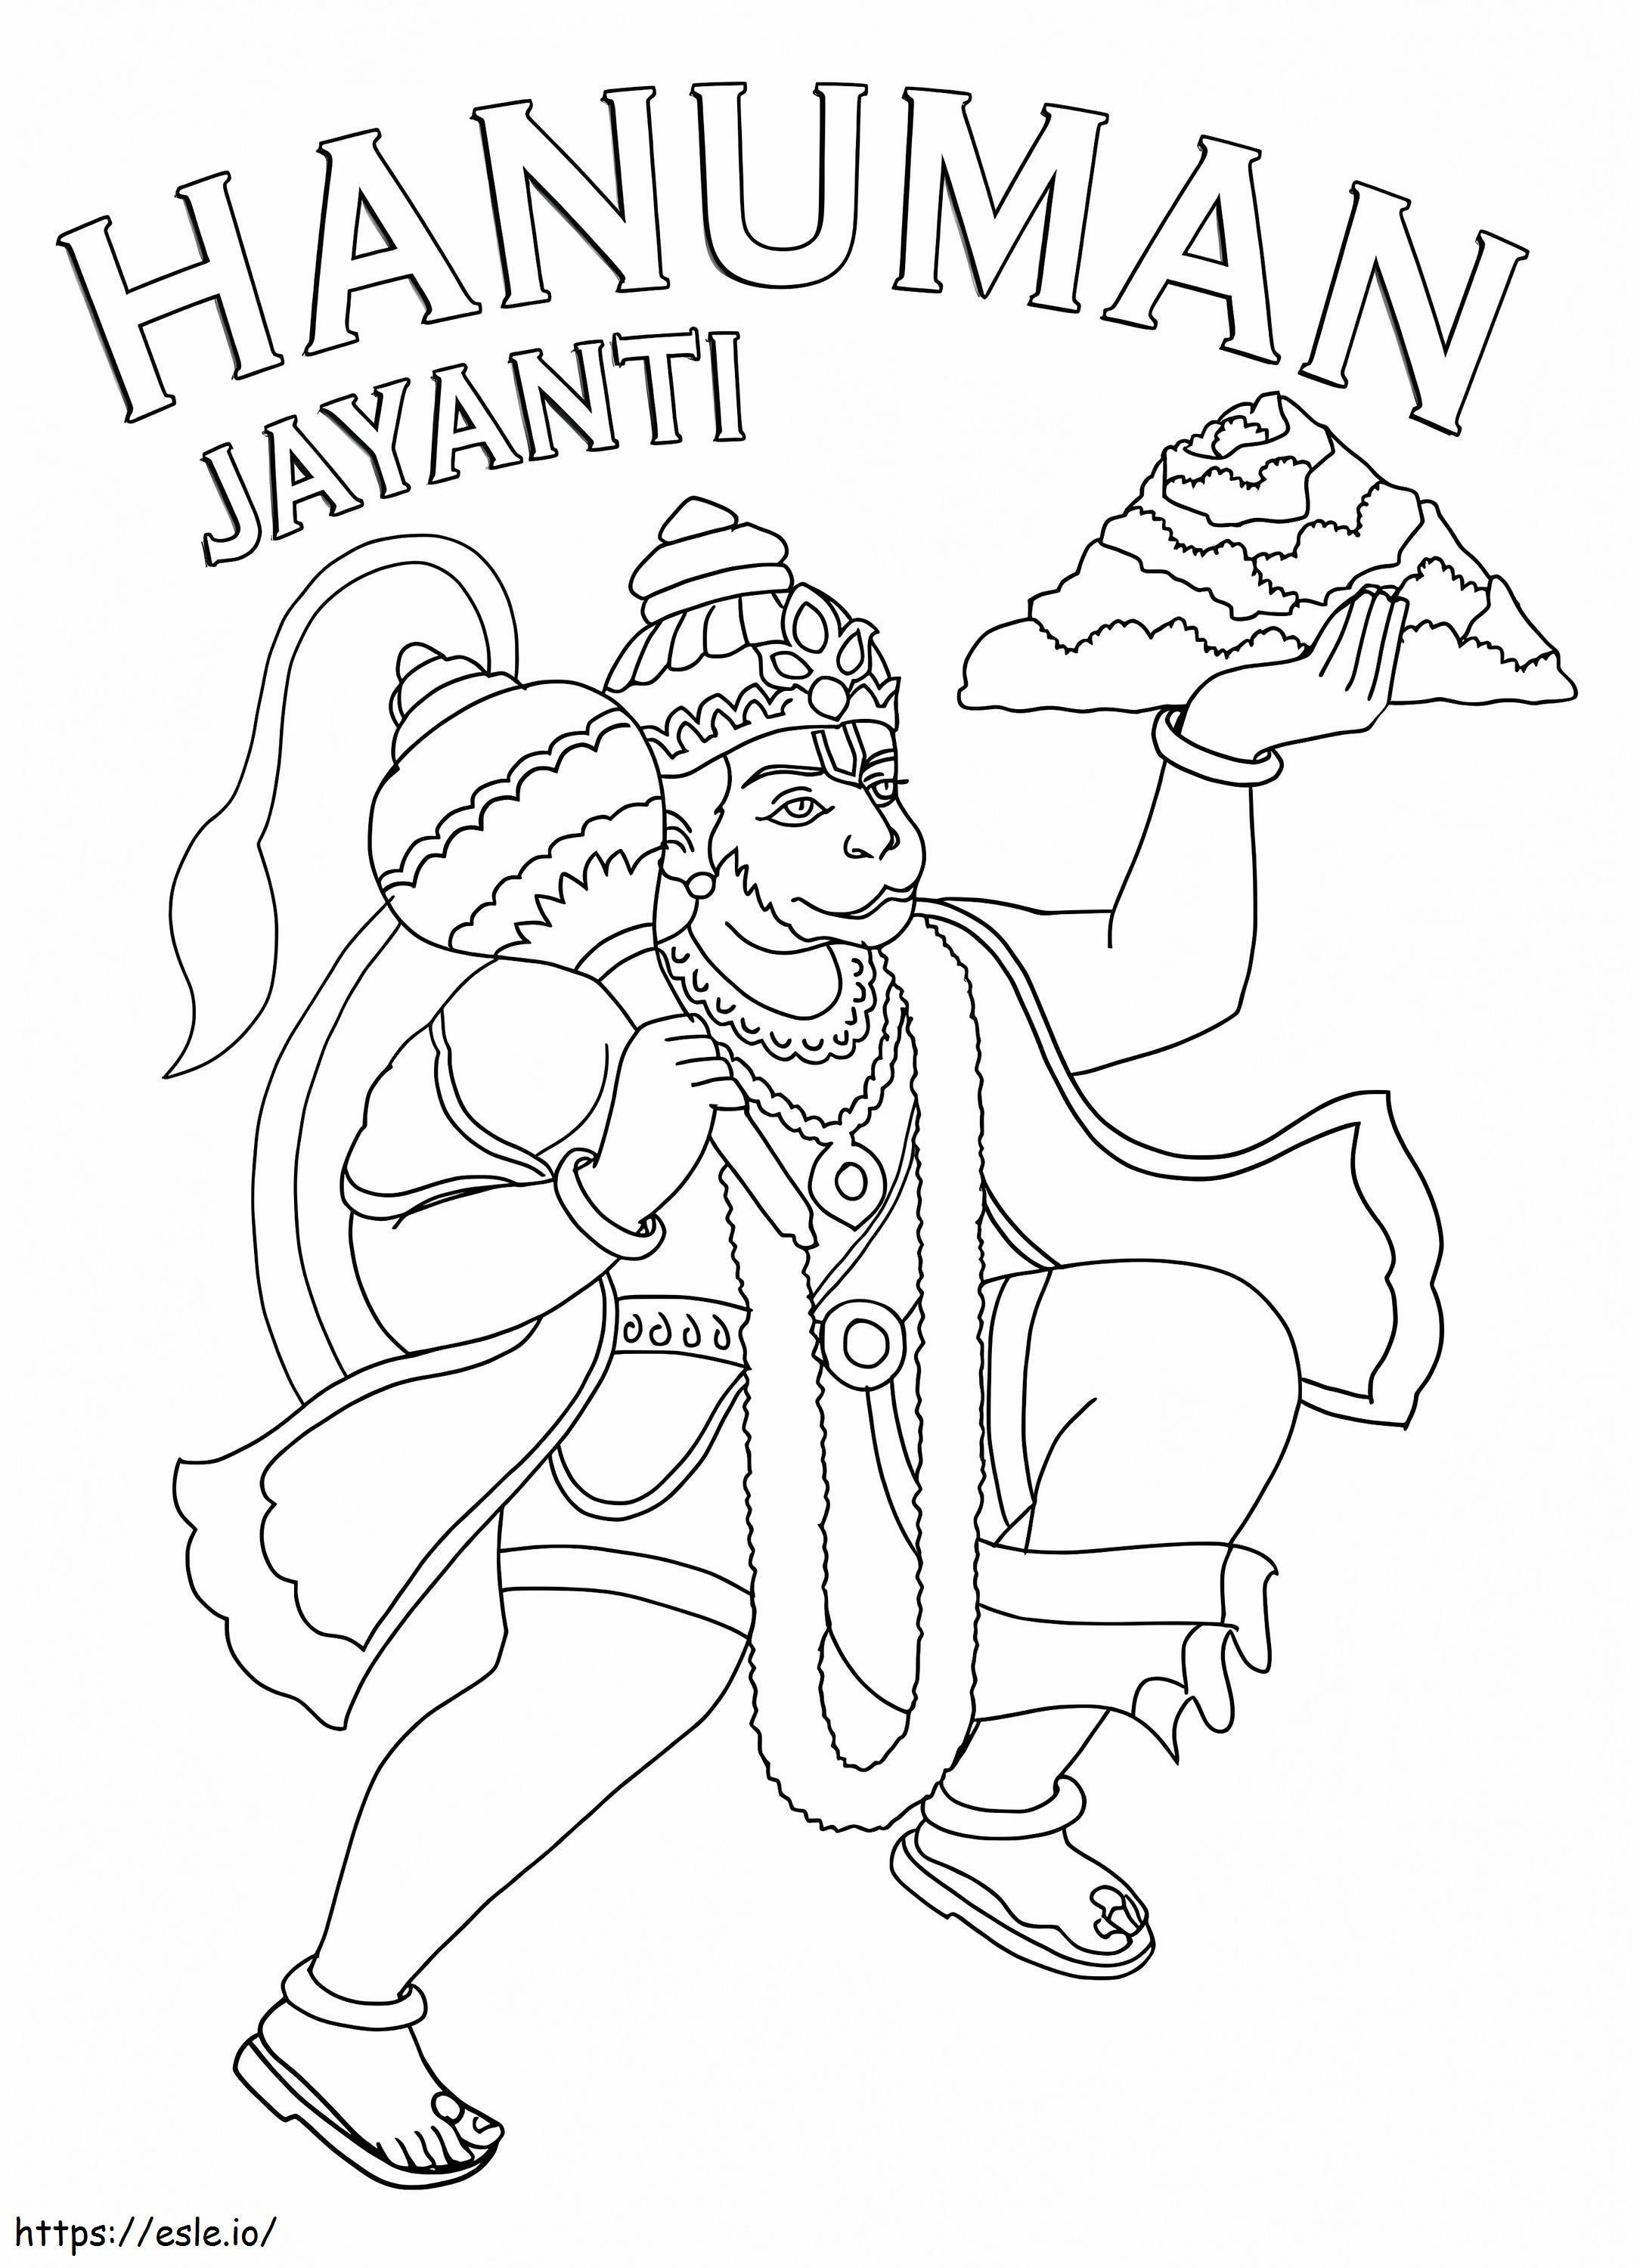 Hanuman Jayanti 8 para colorir